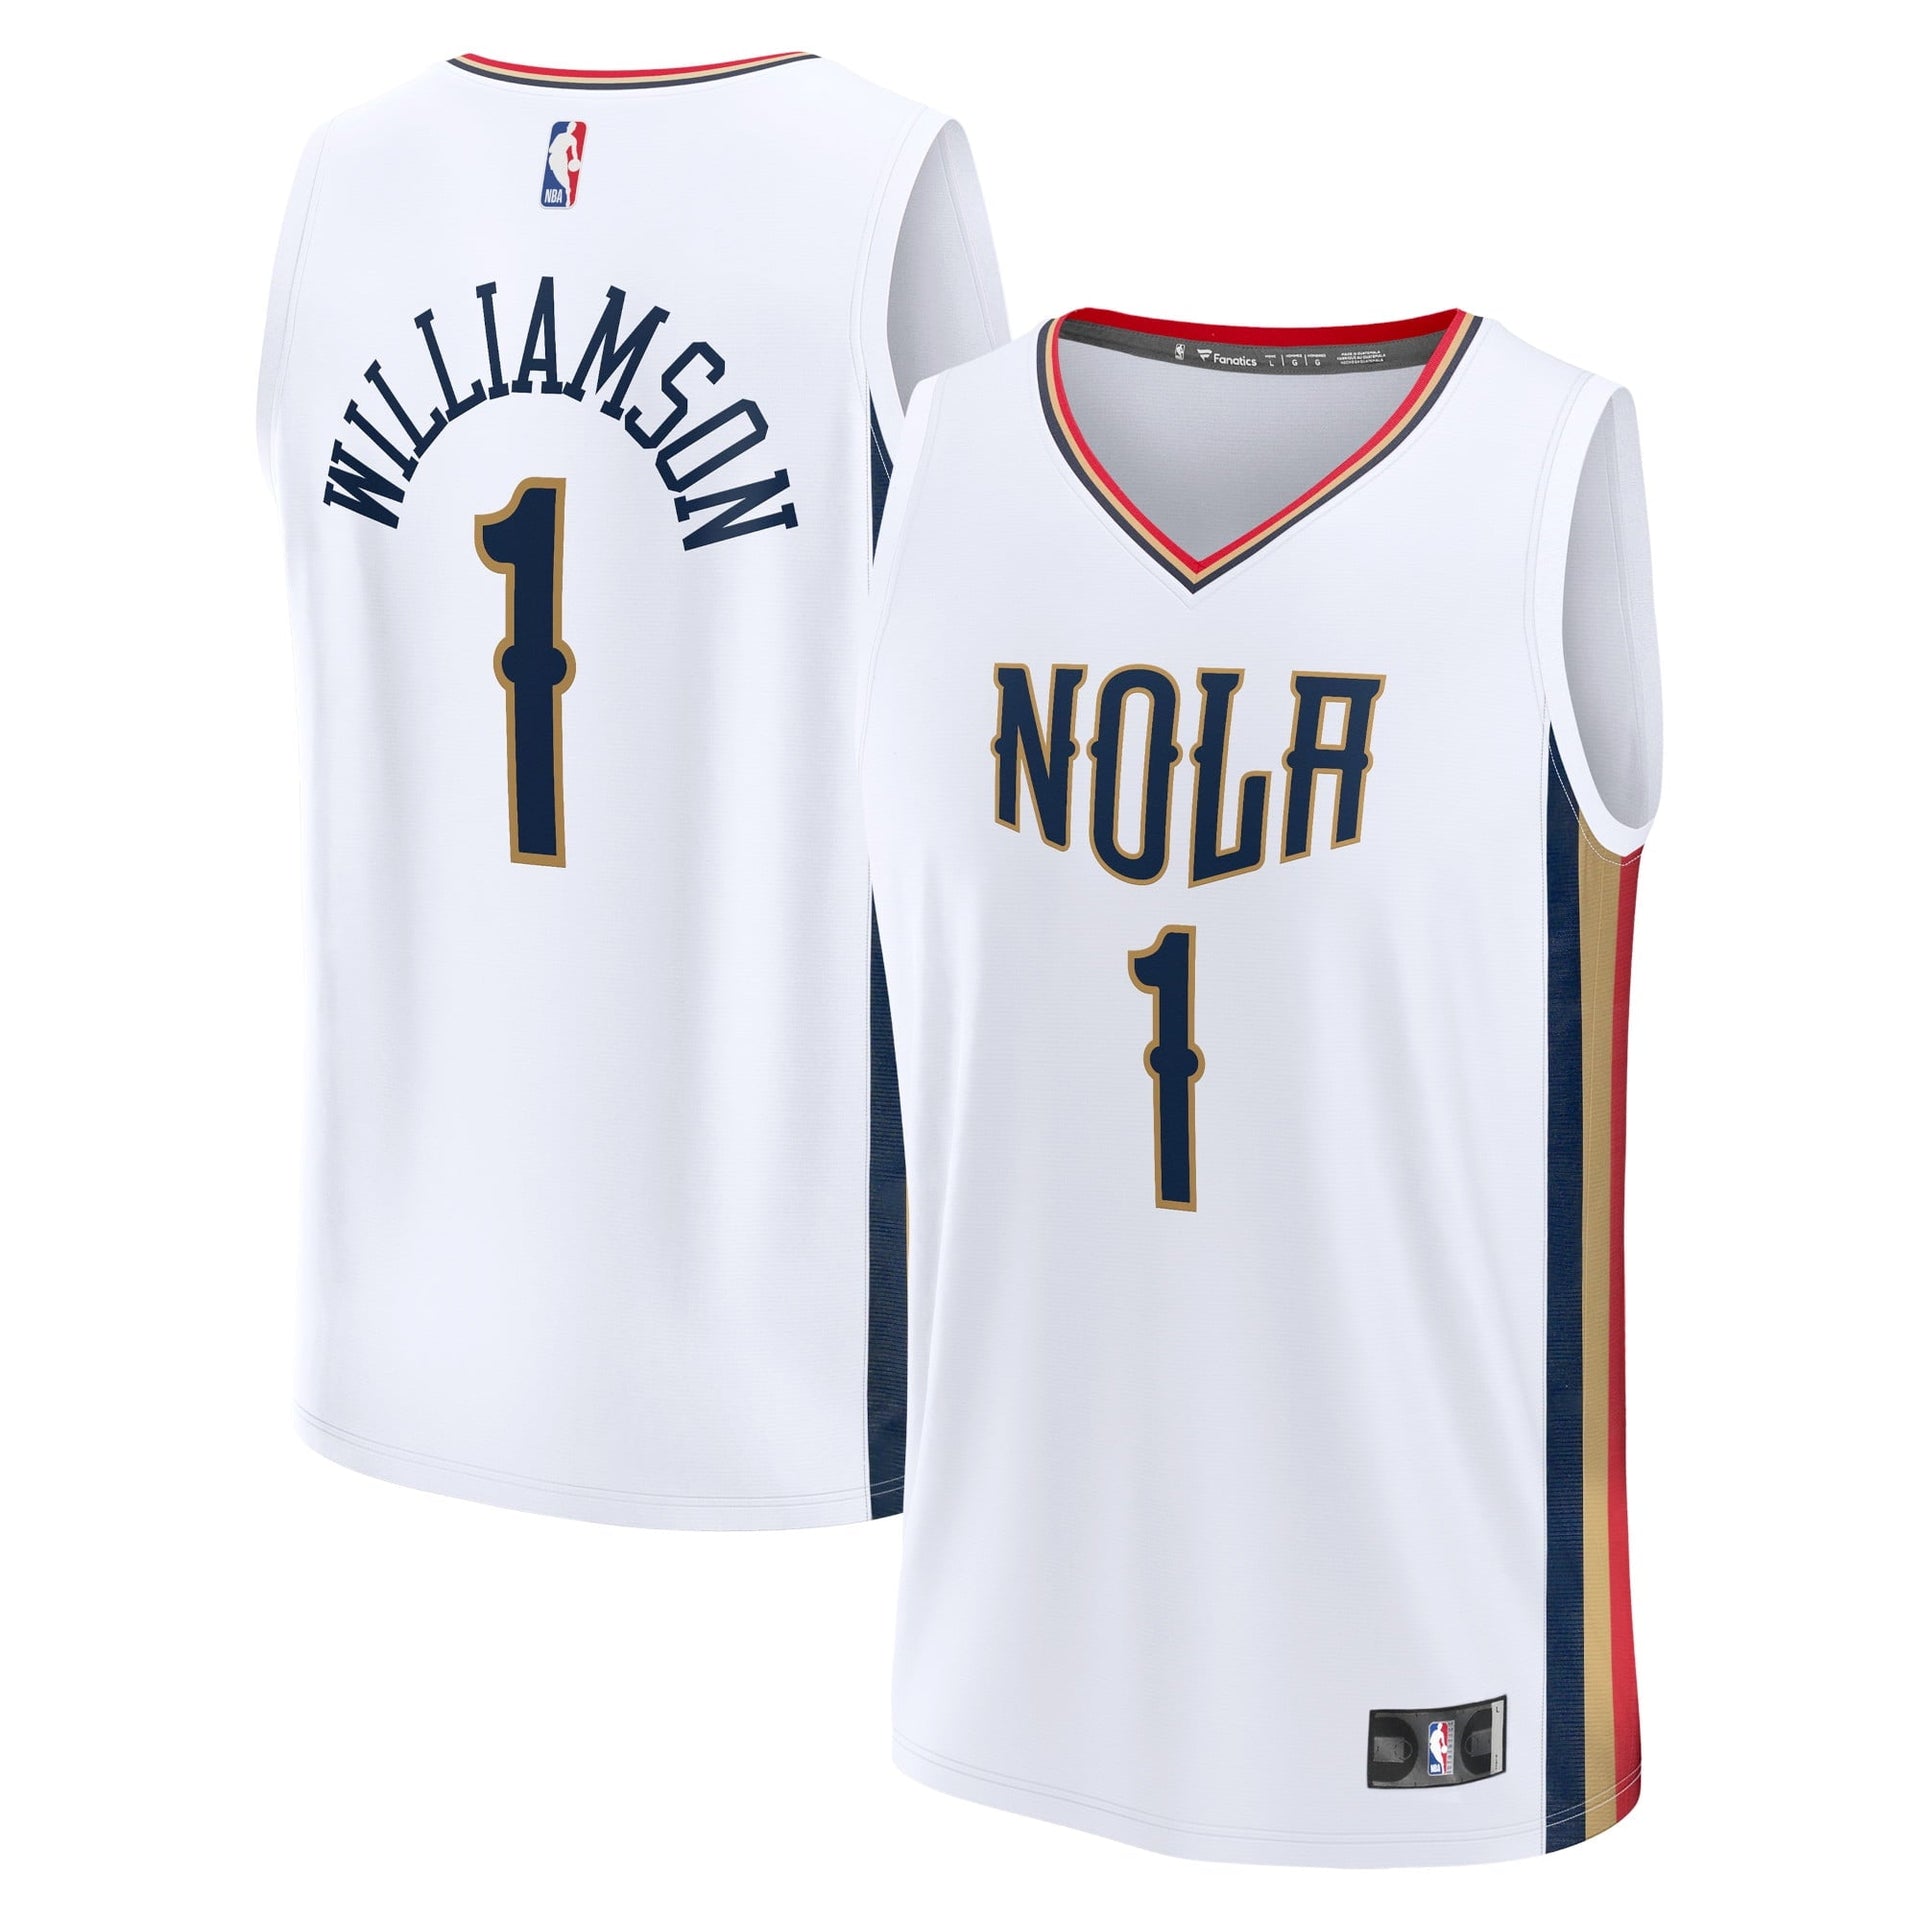 Cheap New Orleans Pelicans Apparel, Discount Pelicans Gear, NBA Pelicans  Merchandise On Sale